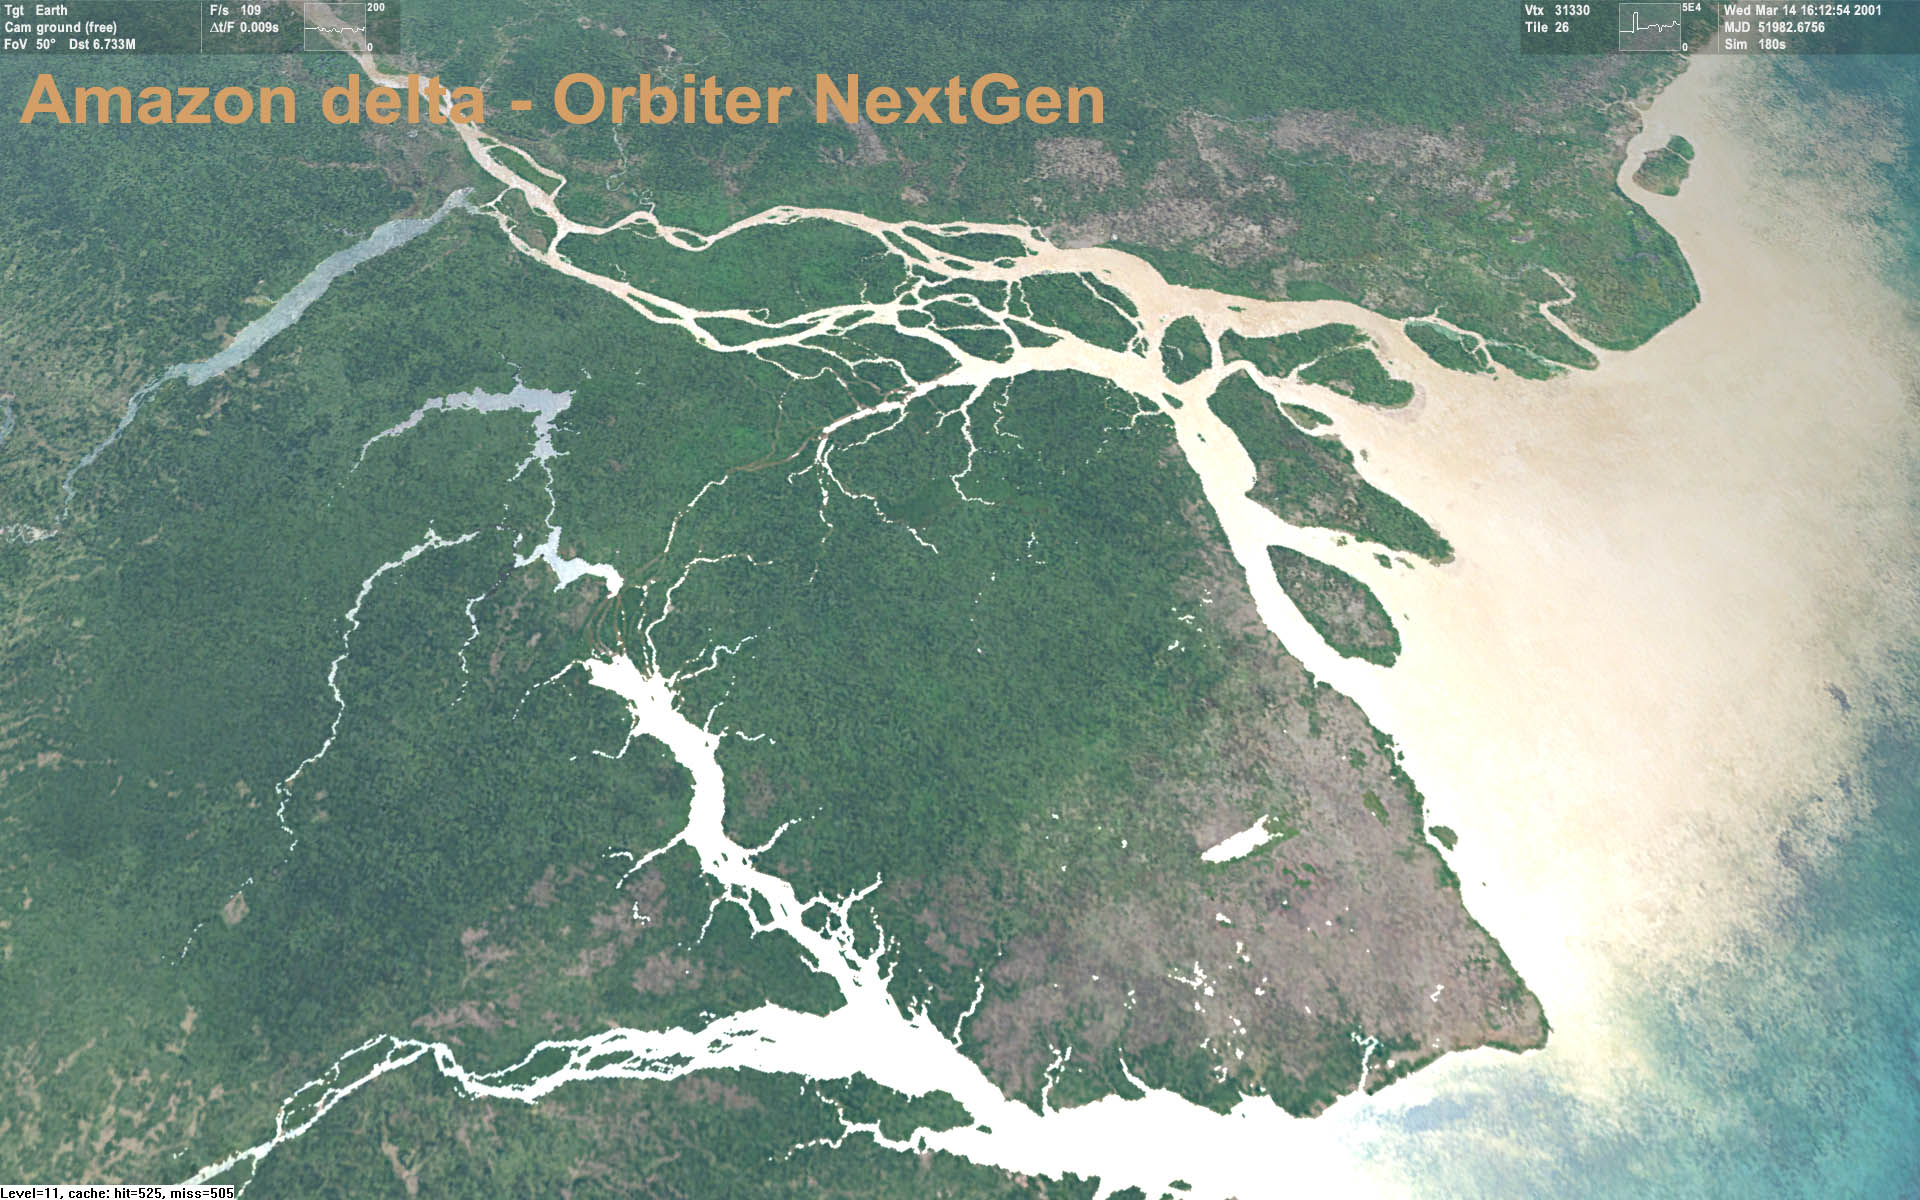 Amazon delta - new water mask